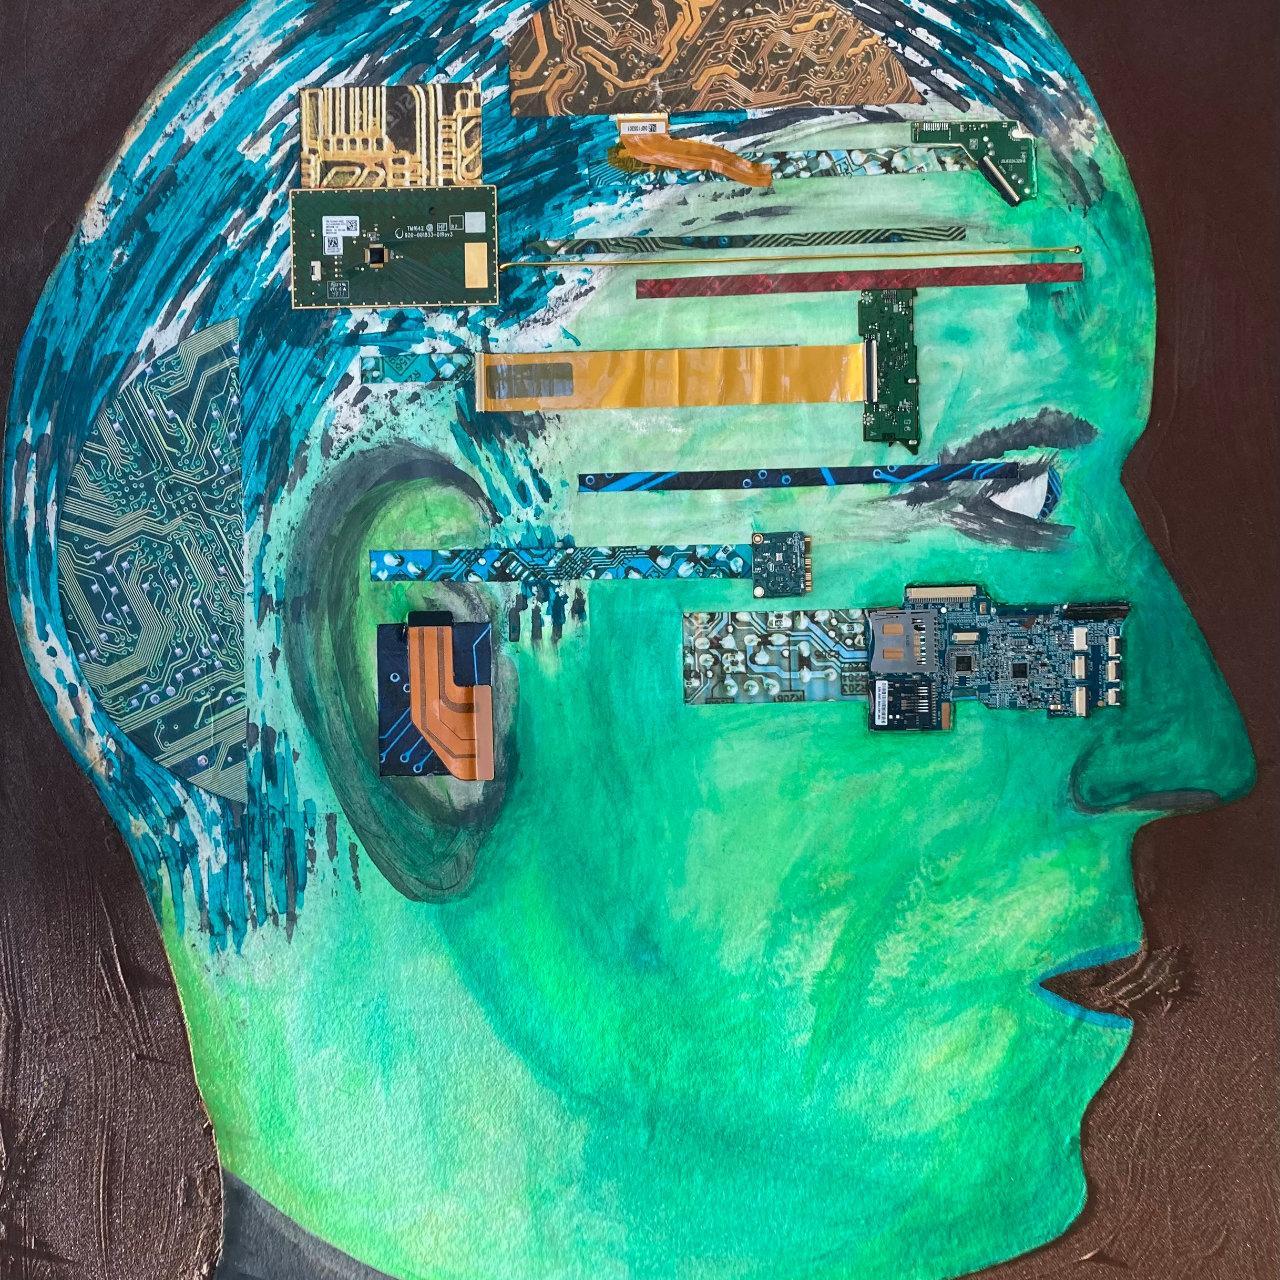 „K.I.- Künstliche Intelligenz“, Eisenrost, Elektronikteile, Acryl auf Leinwand, 60x80cm, 2022